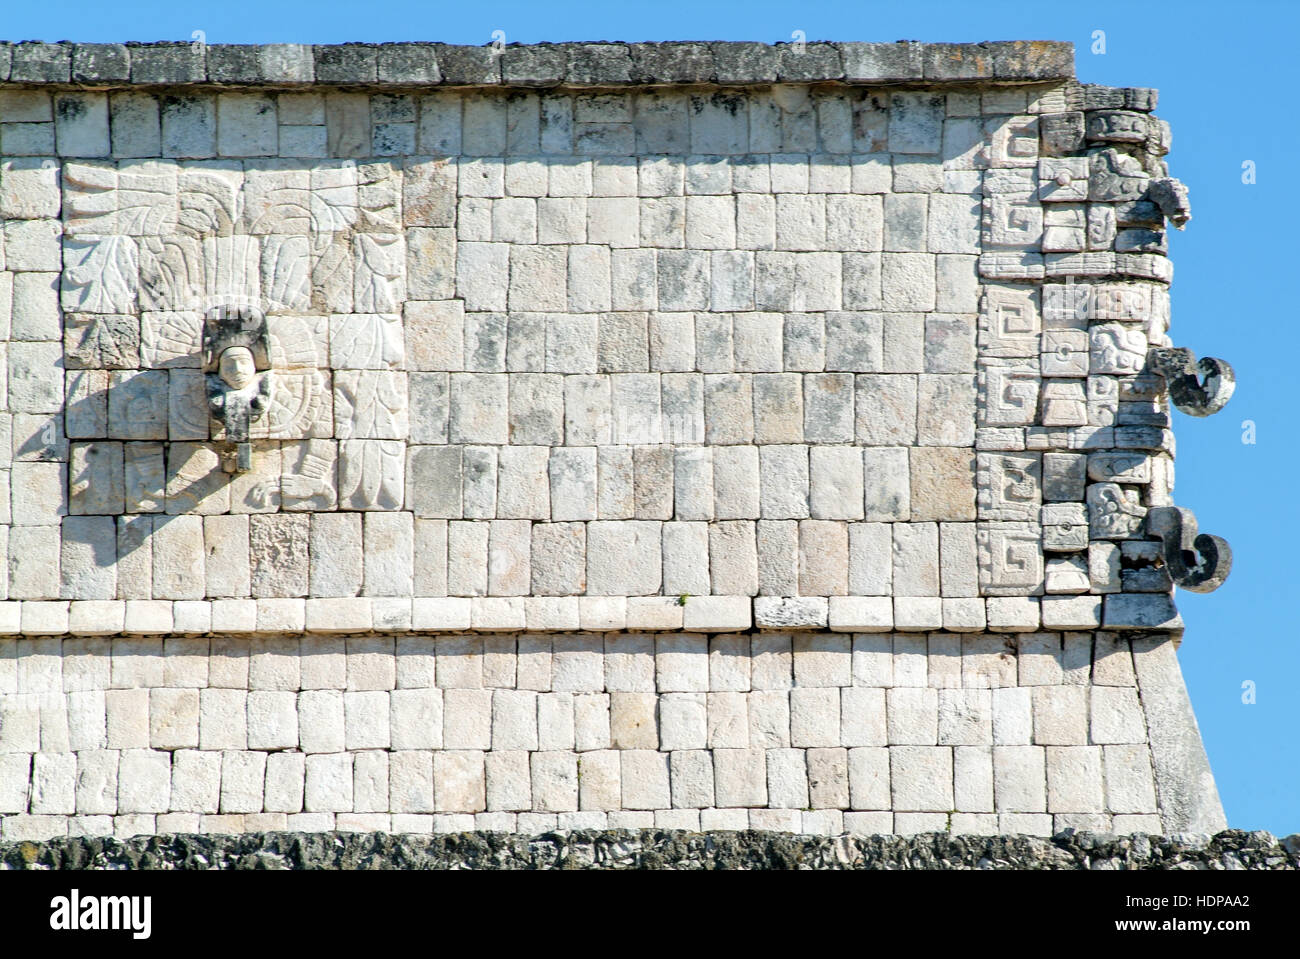 Templo de los Guerreros, Temple of the Warriors at Chichen Itza, Yucatan, Mexico Stock Photo